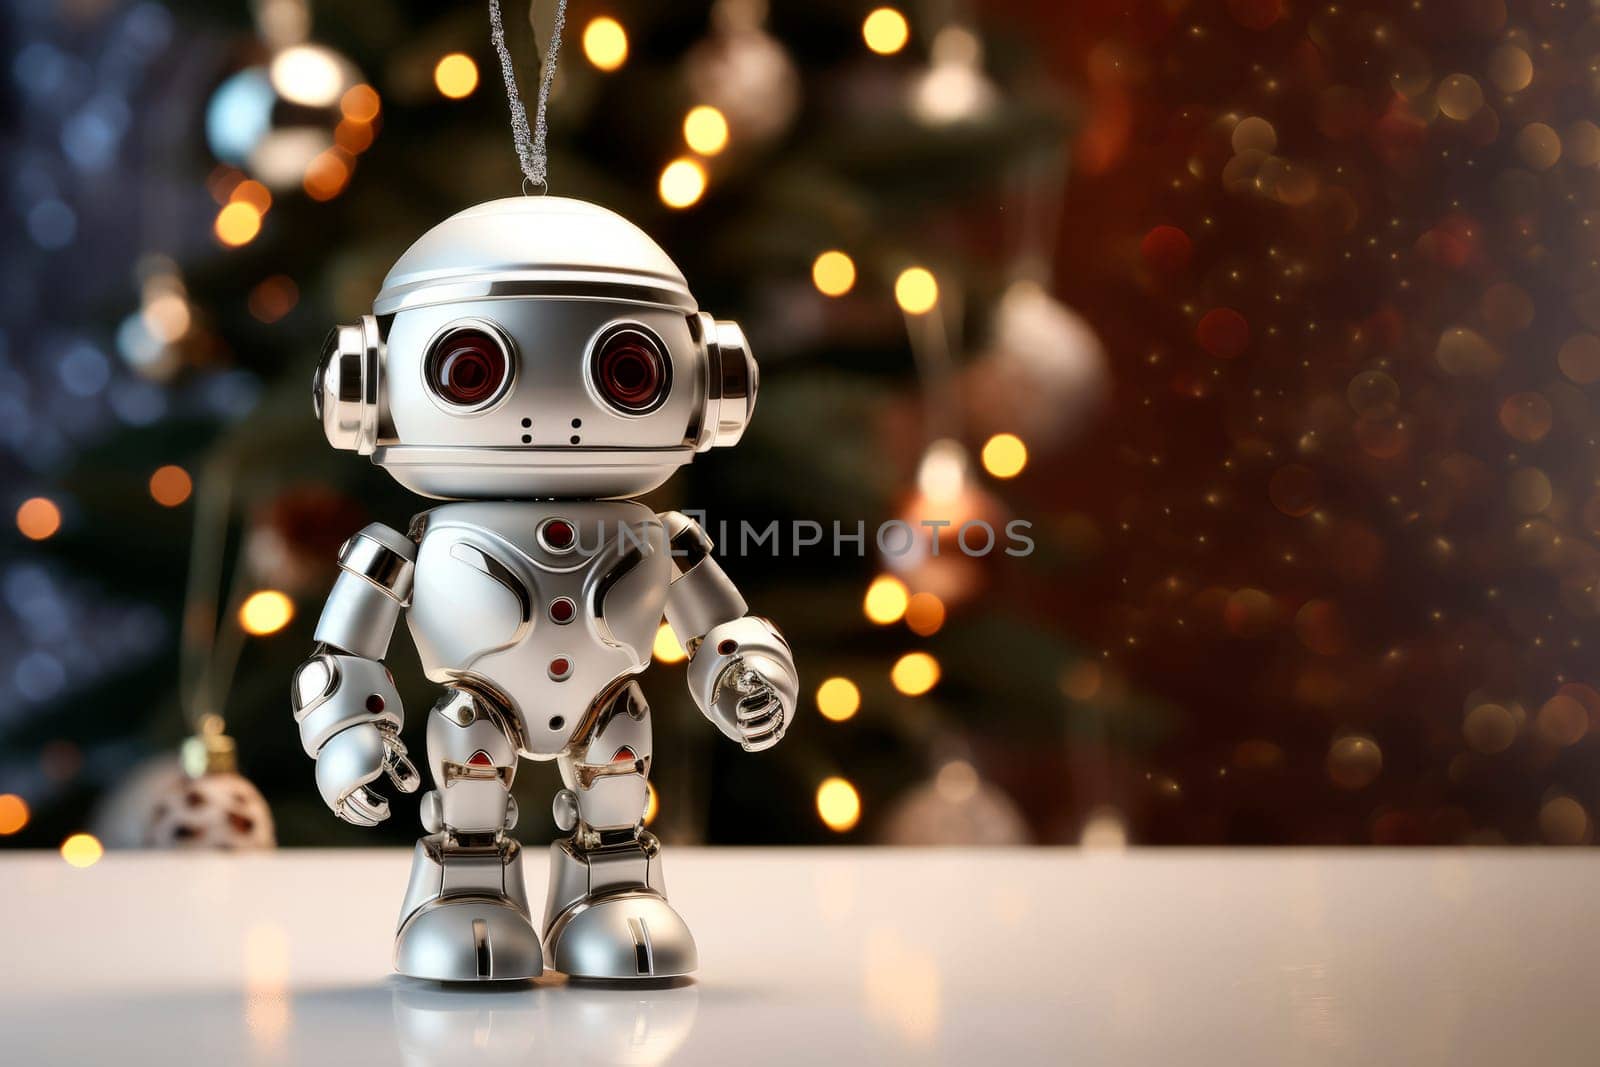 a New Year's toy in the form of a robot on a Christmas background. Copy space. by Spirina